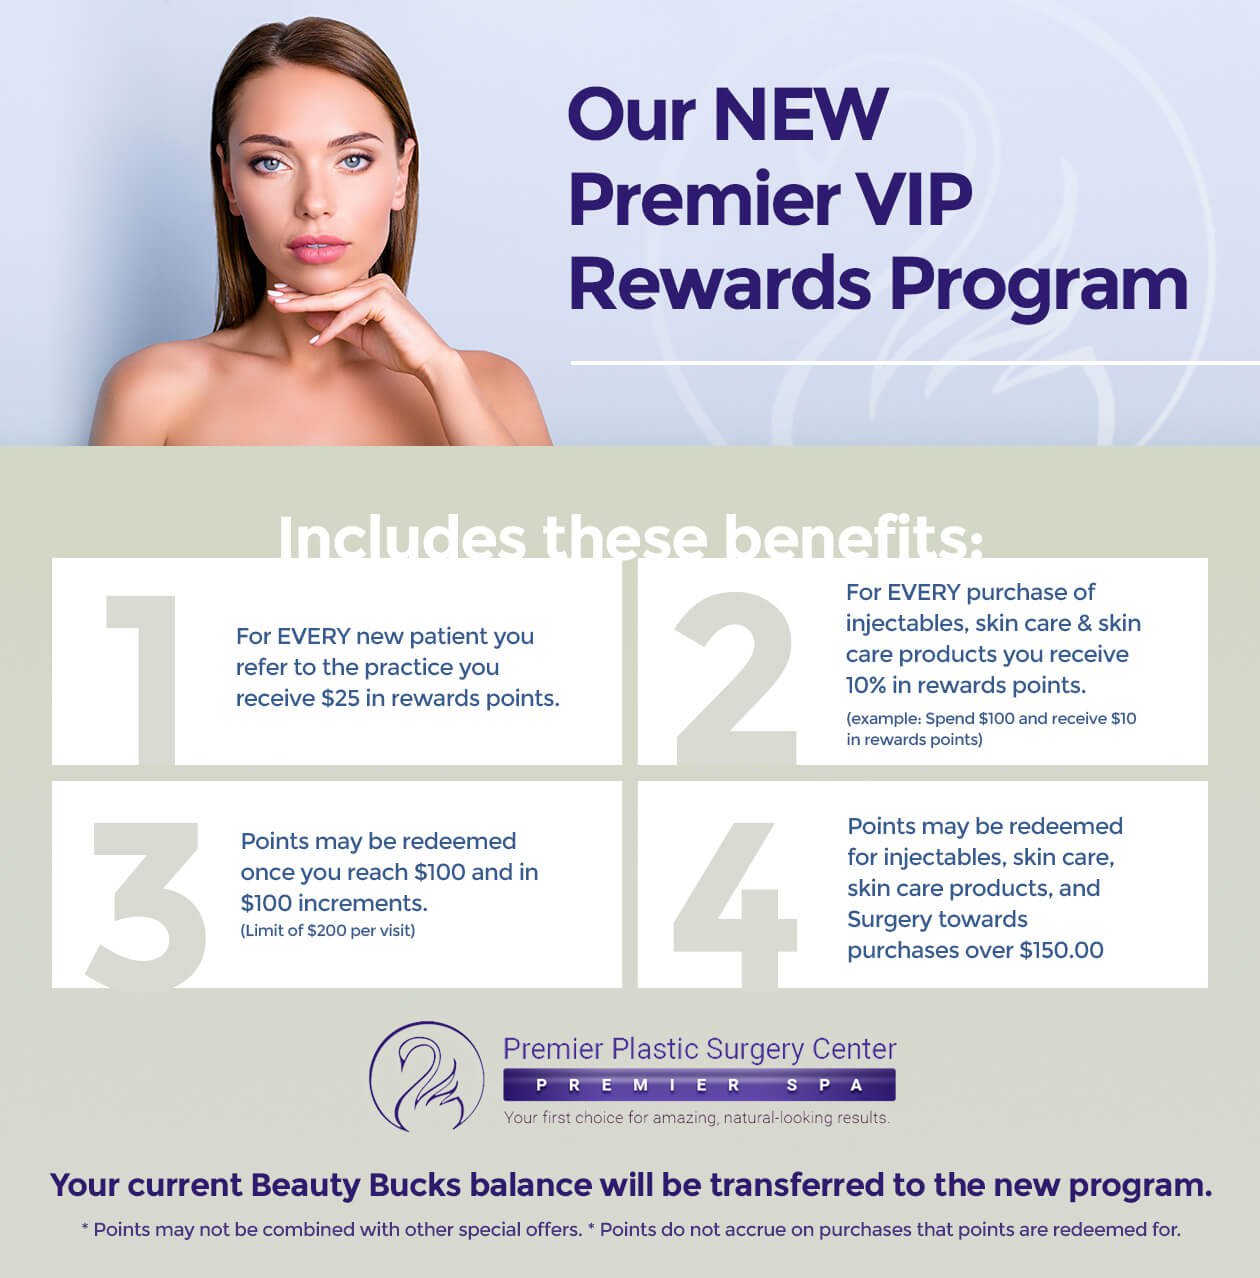 Premier VIP Rewards Program